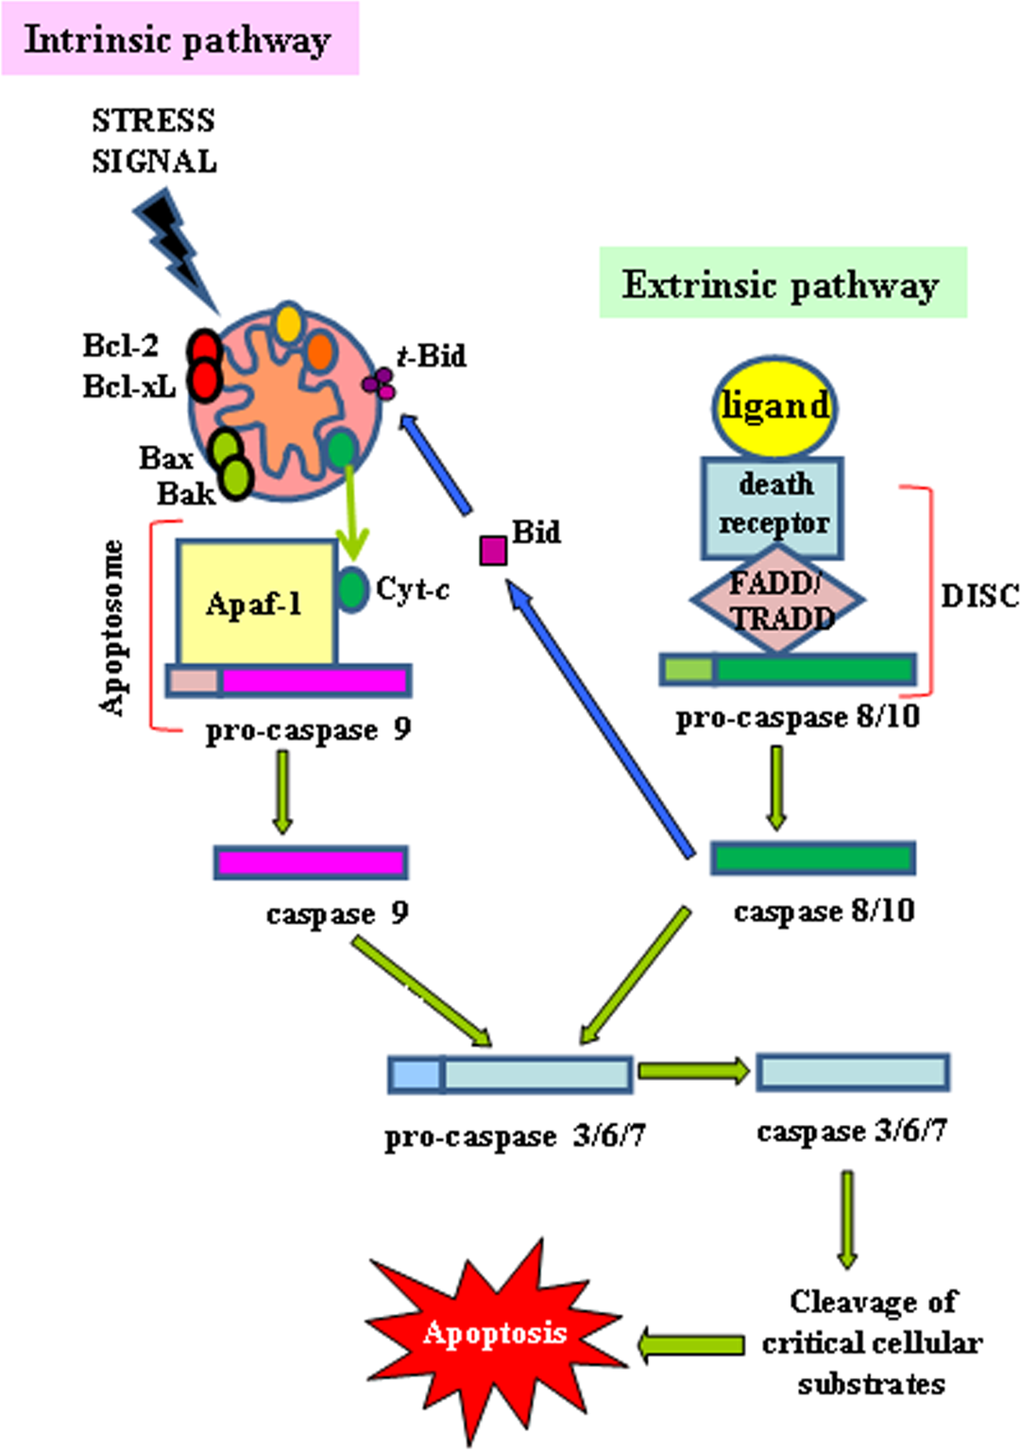 Intrinsic and extrinsic apoptotic pathways